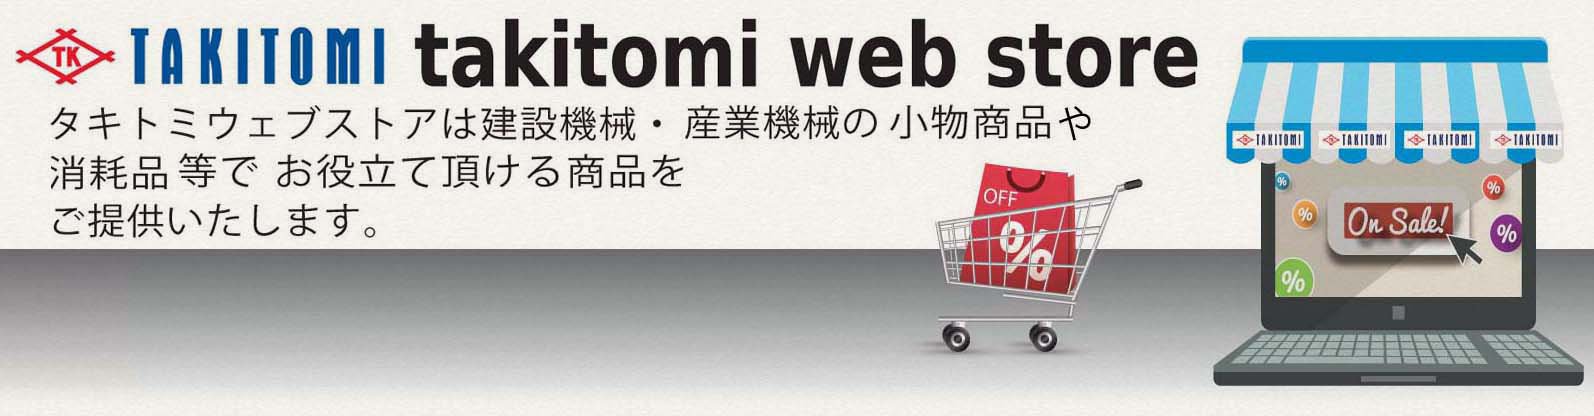 takitomi web store